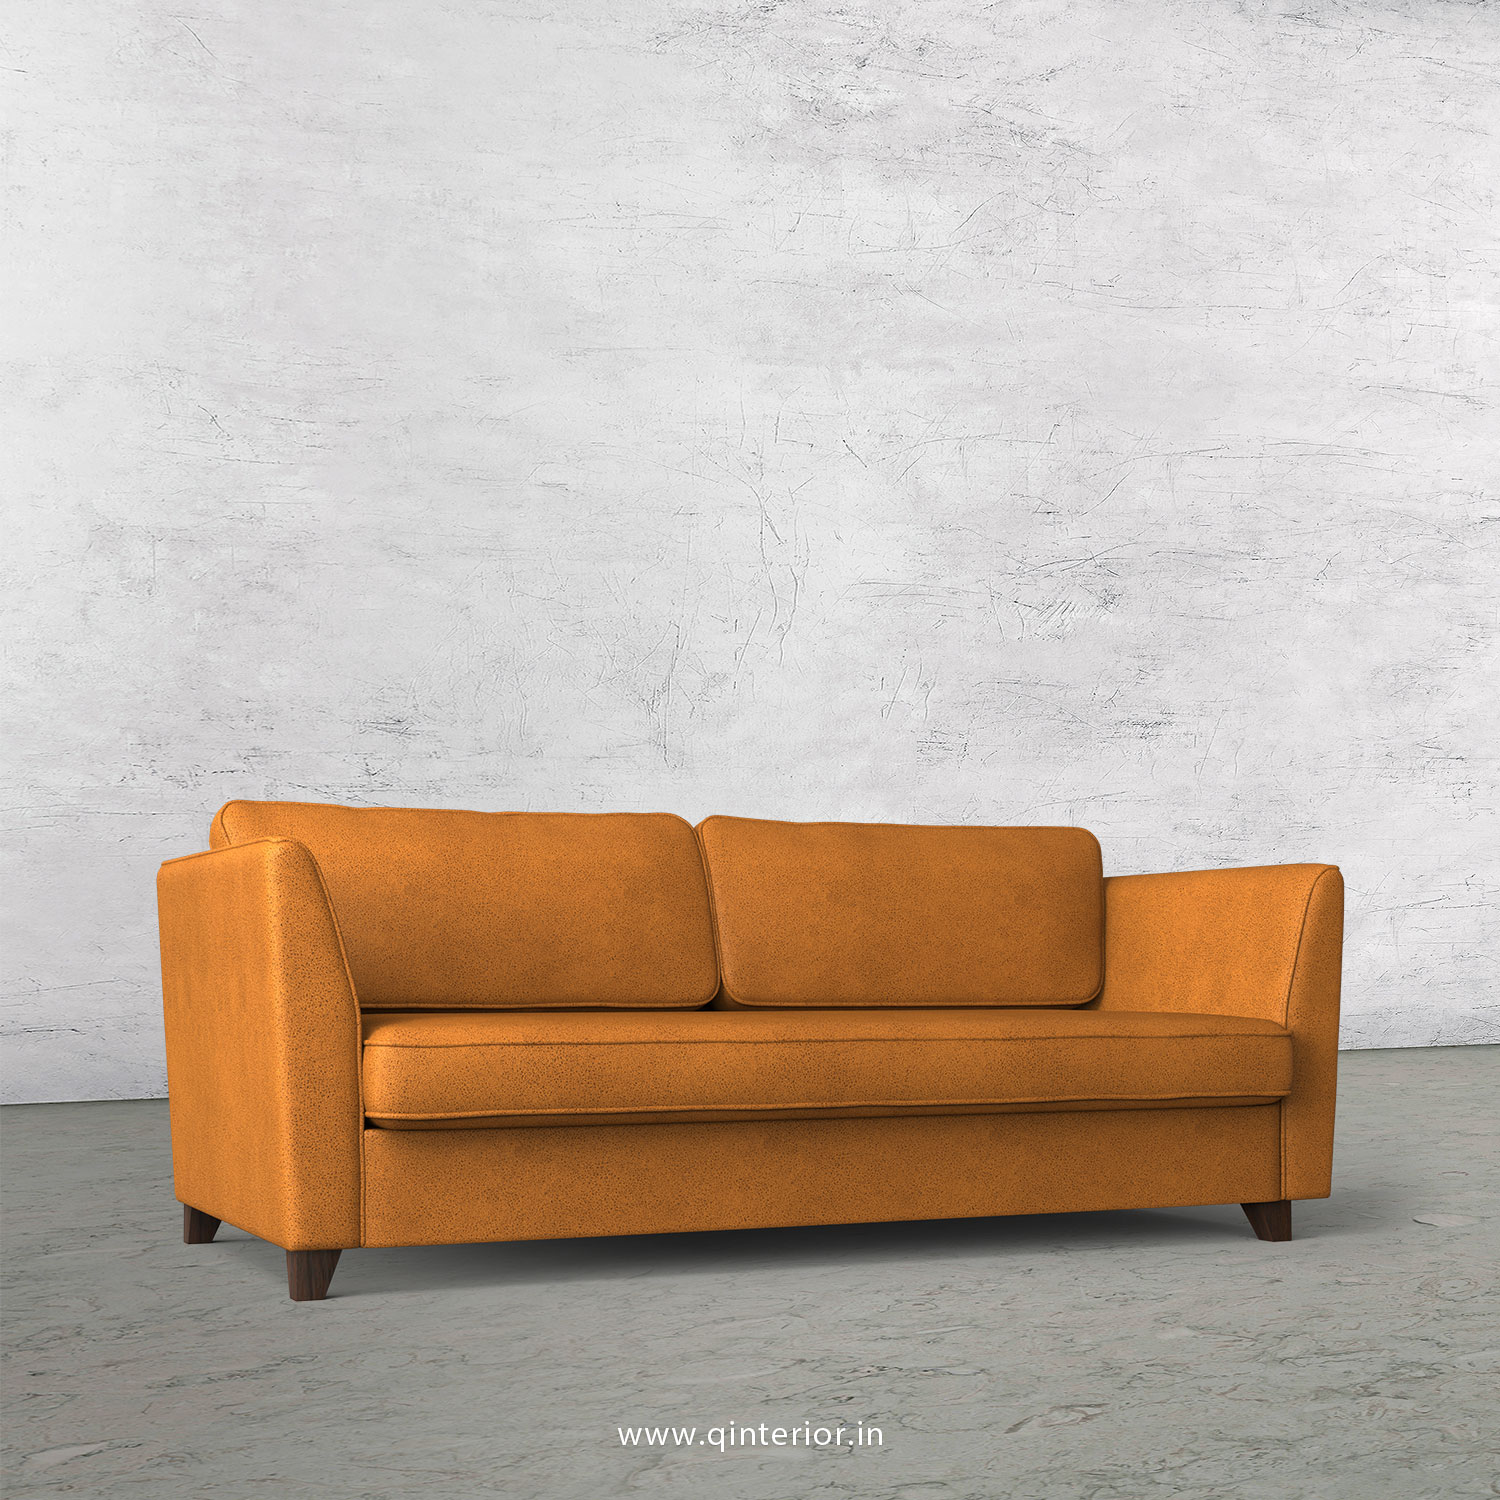 KINGSTONE 3 Seater Sofa in Fab Leather Fabric - SFA004 FL14